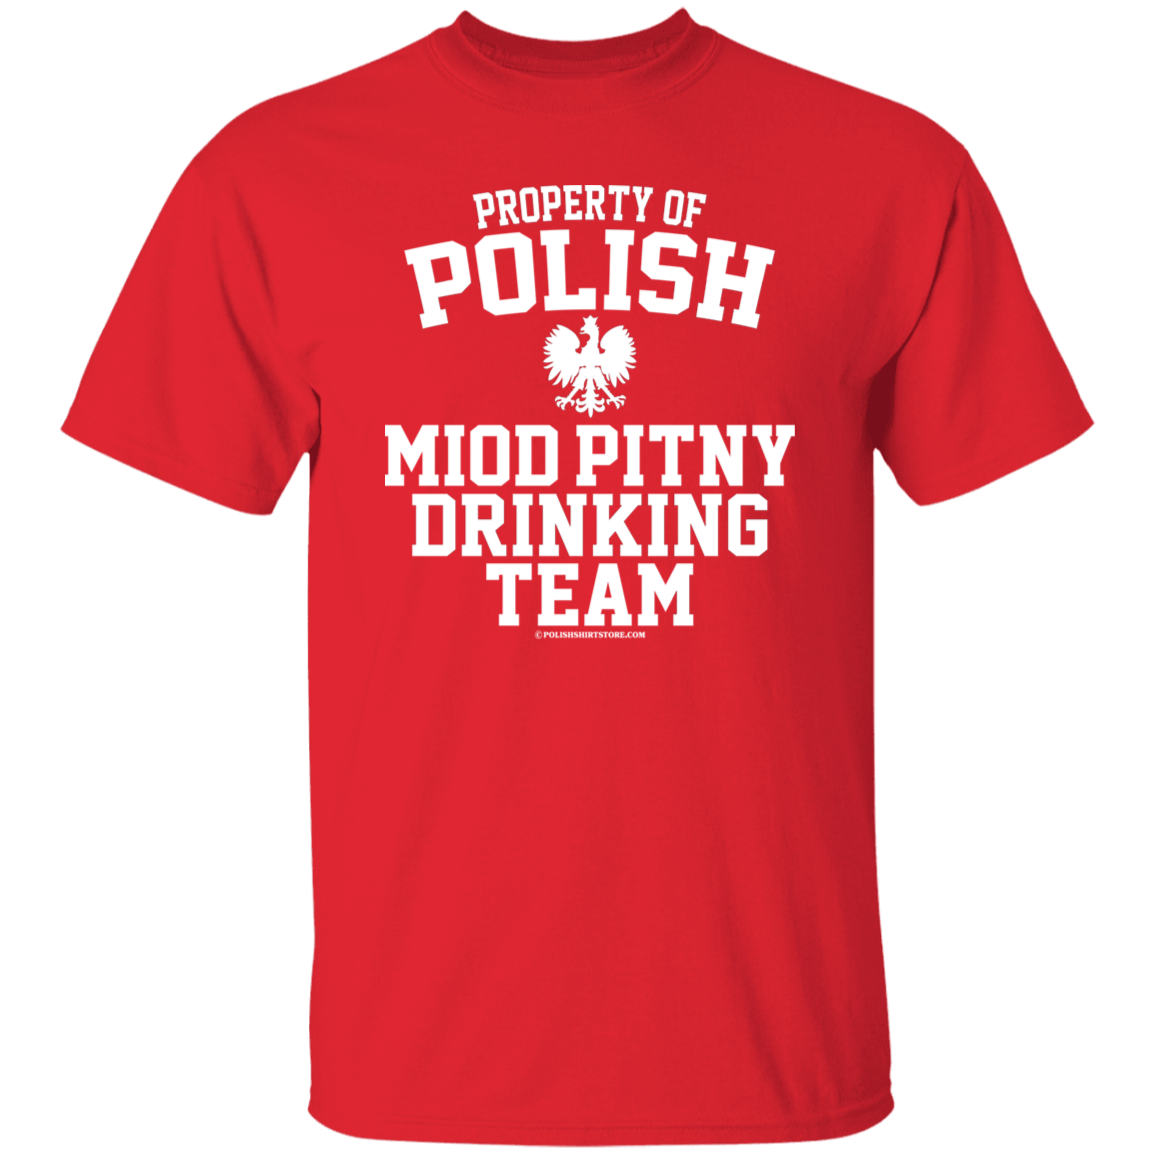 Property of Polish Miod Pitny Drinking Team Apparel CustomCat G500 5.3 oz. T-Shirt Red S